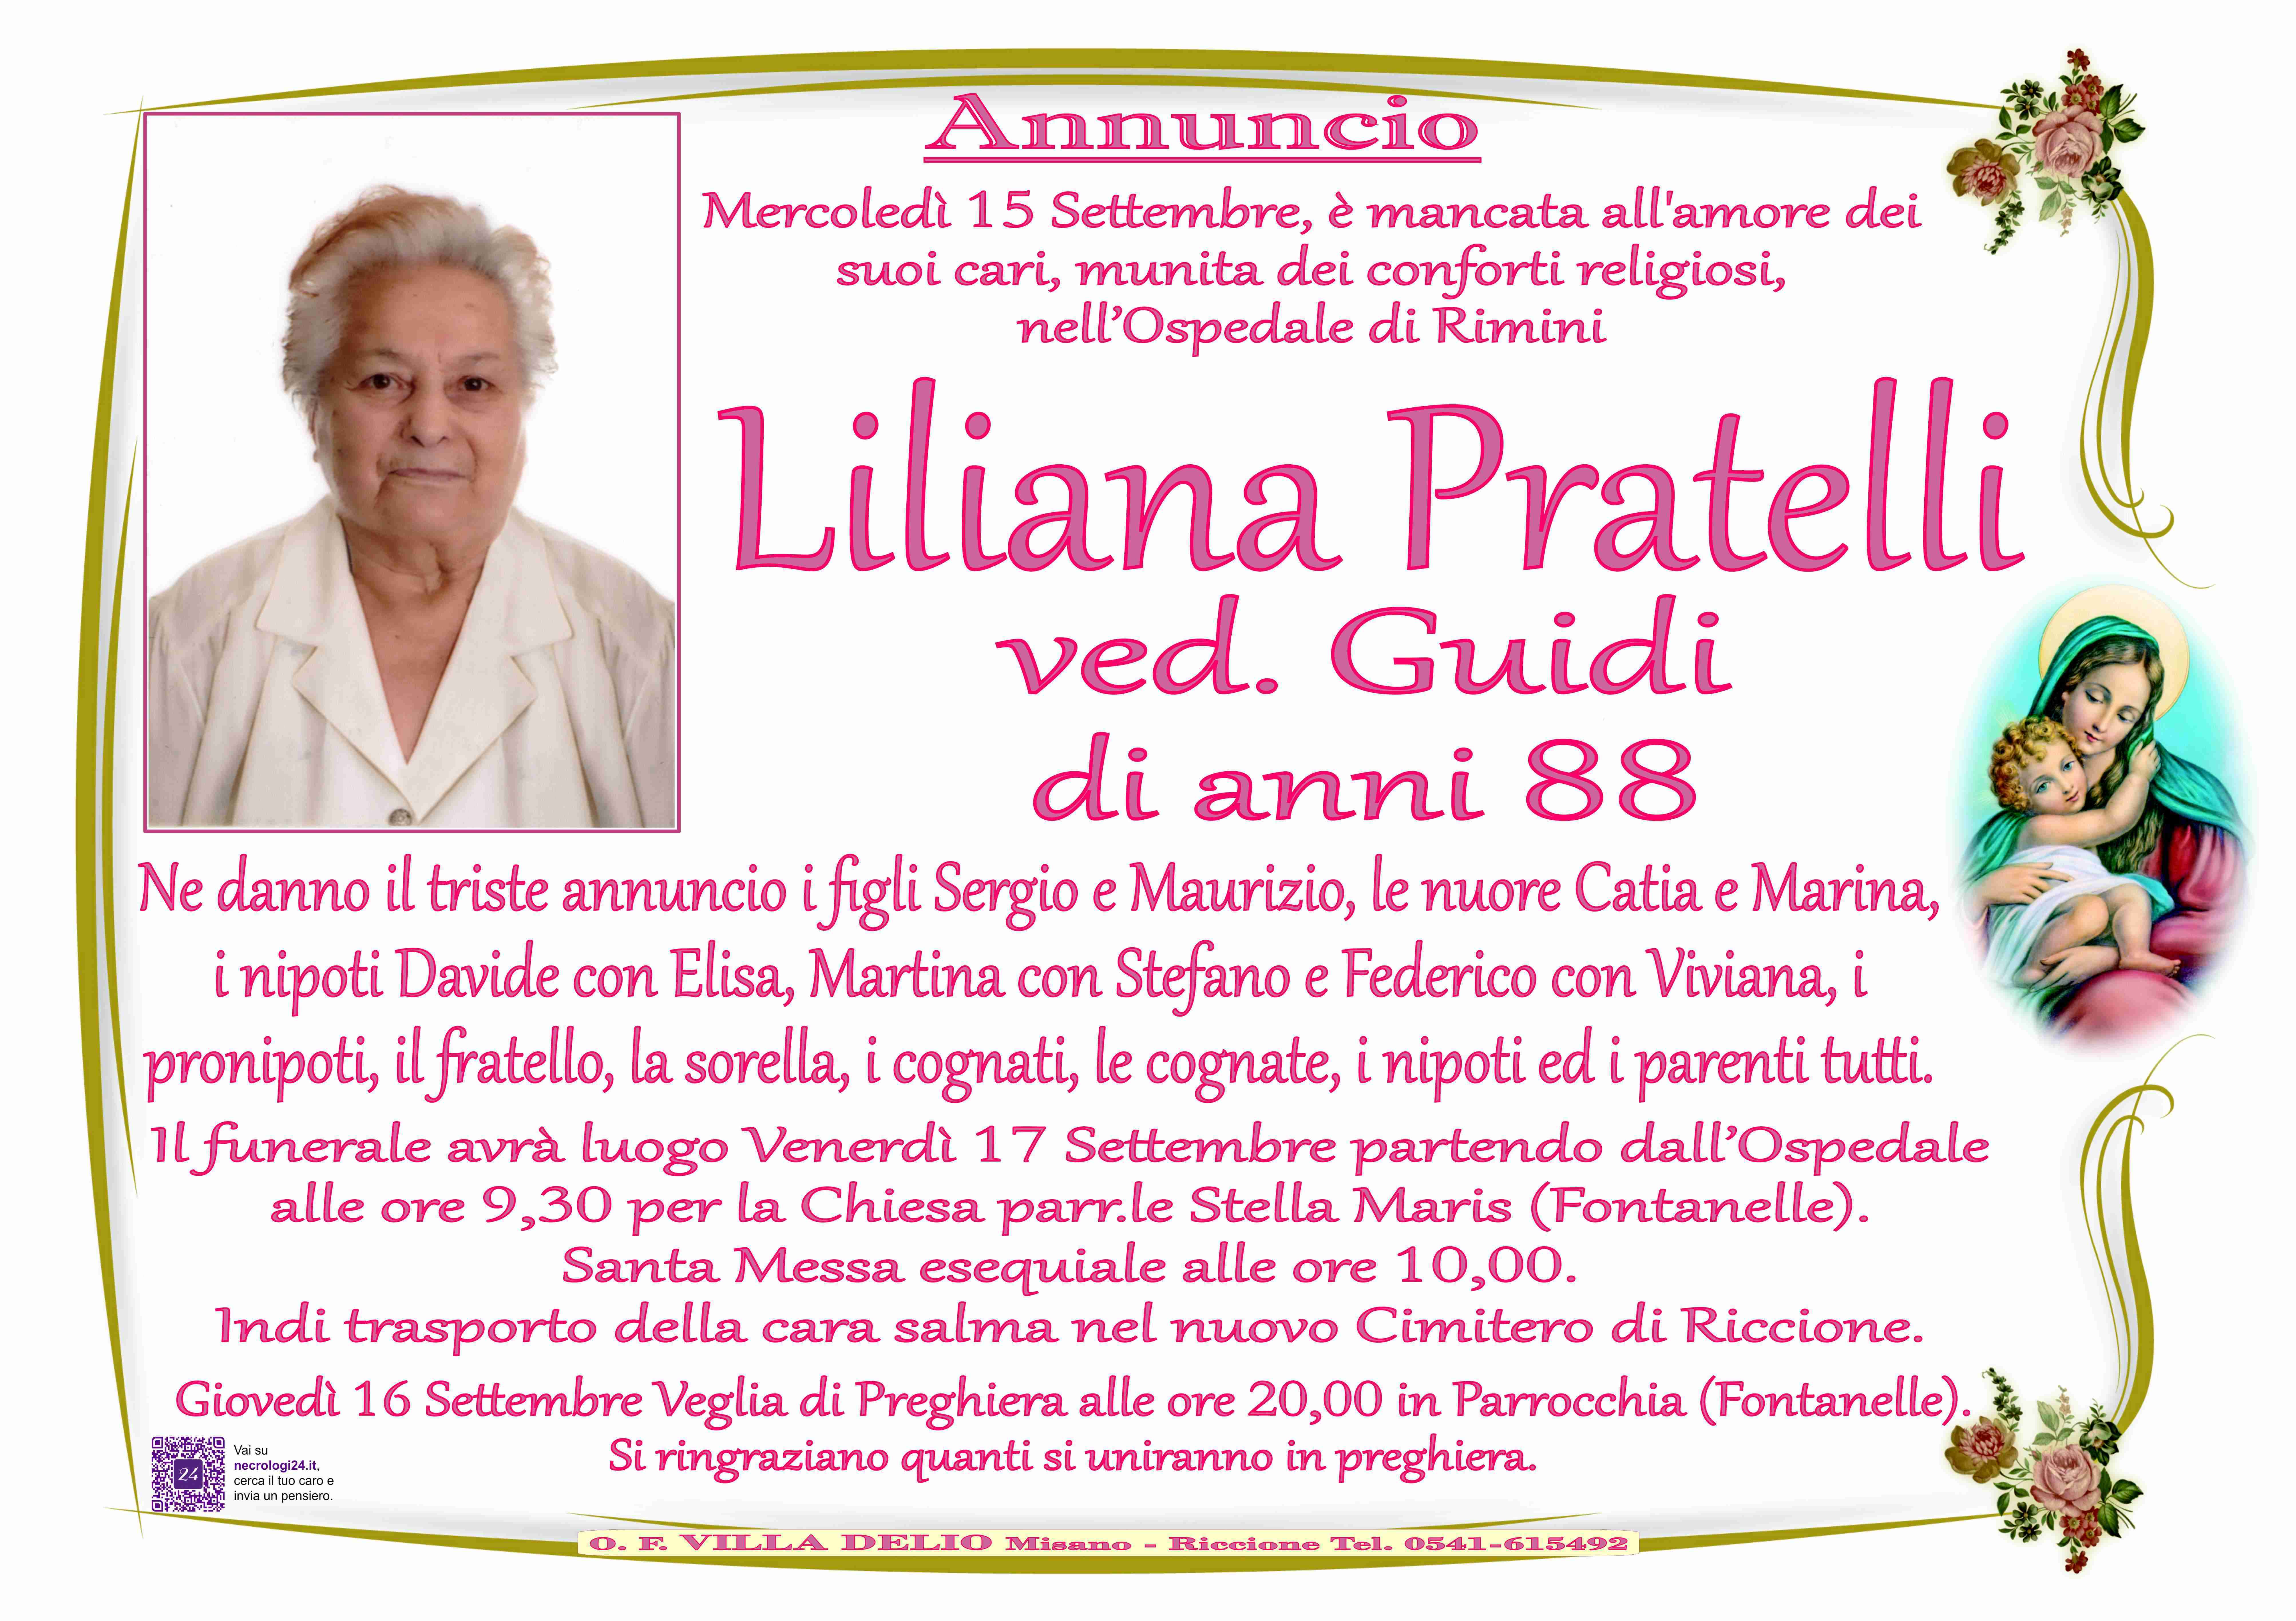 Liliana Pratelli